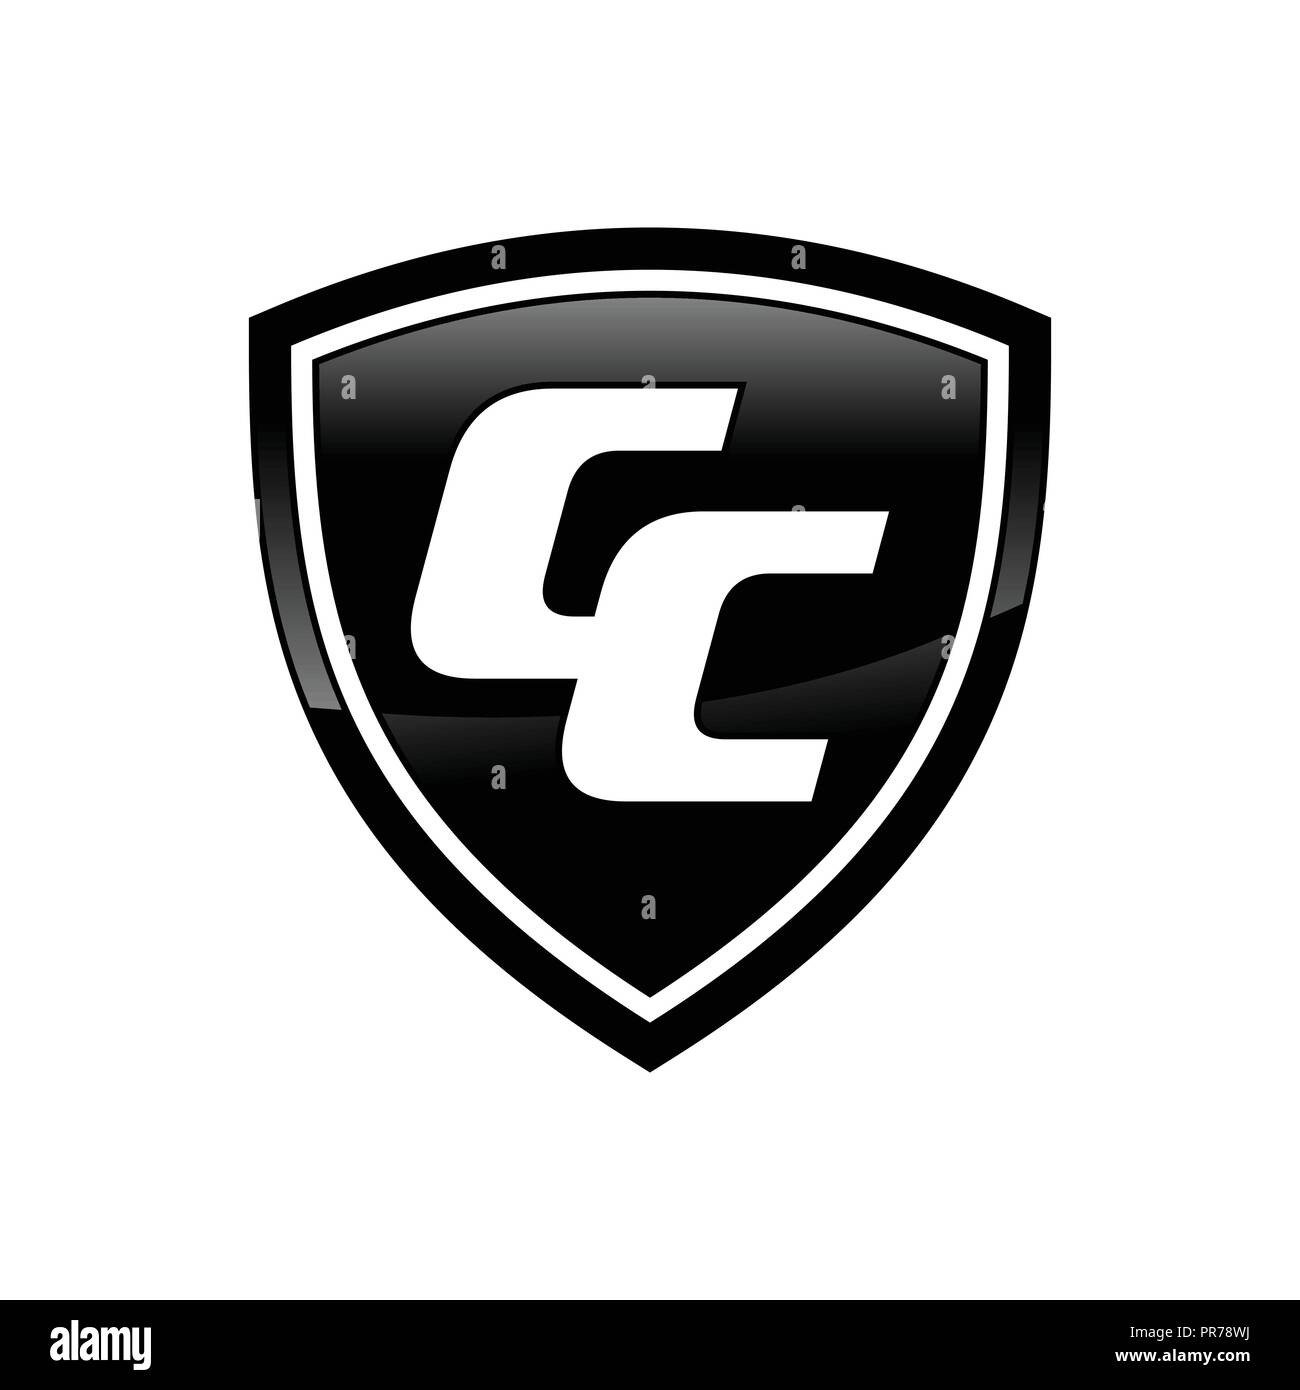 CC Initials Shield Shape Vector Symbol Graphic Logo Design Template Stock Vector